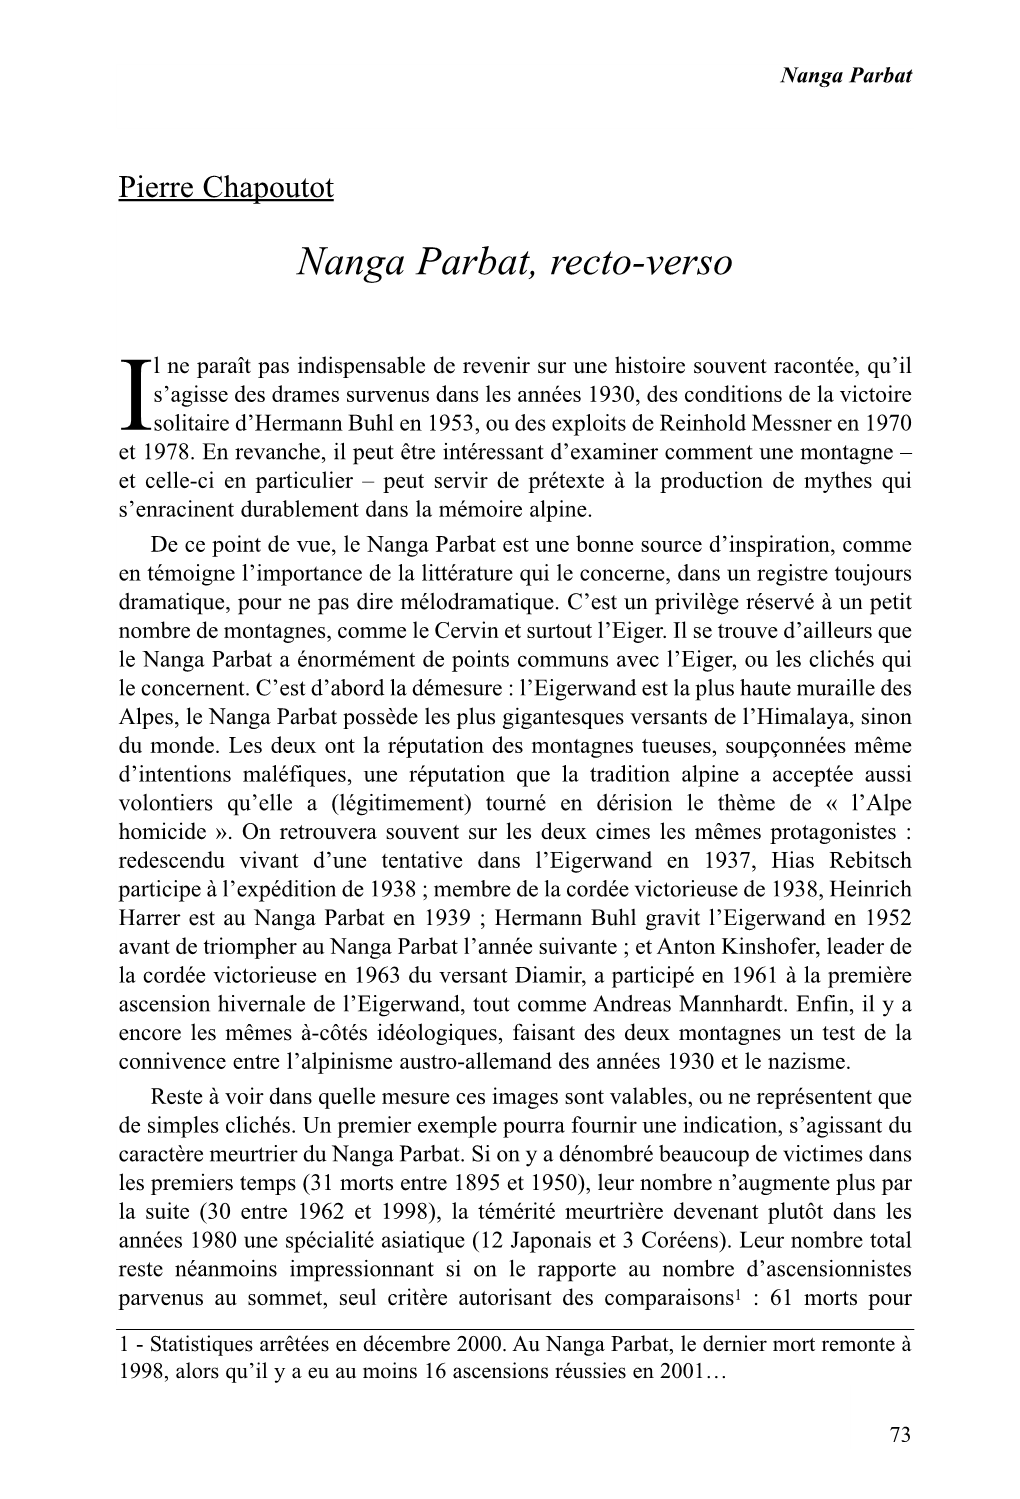 Nanga Parbat, Recto-Verso